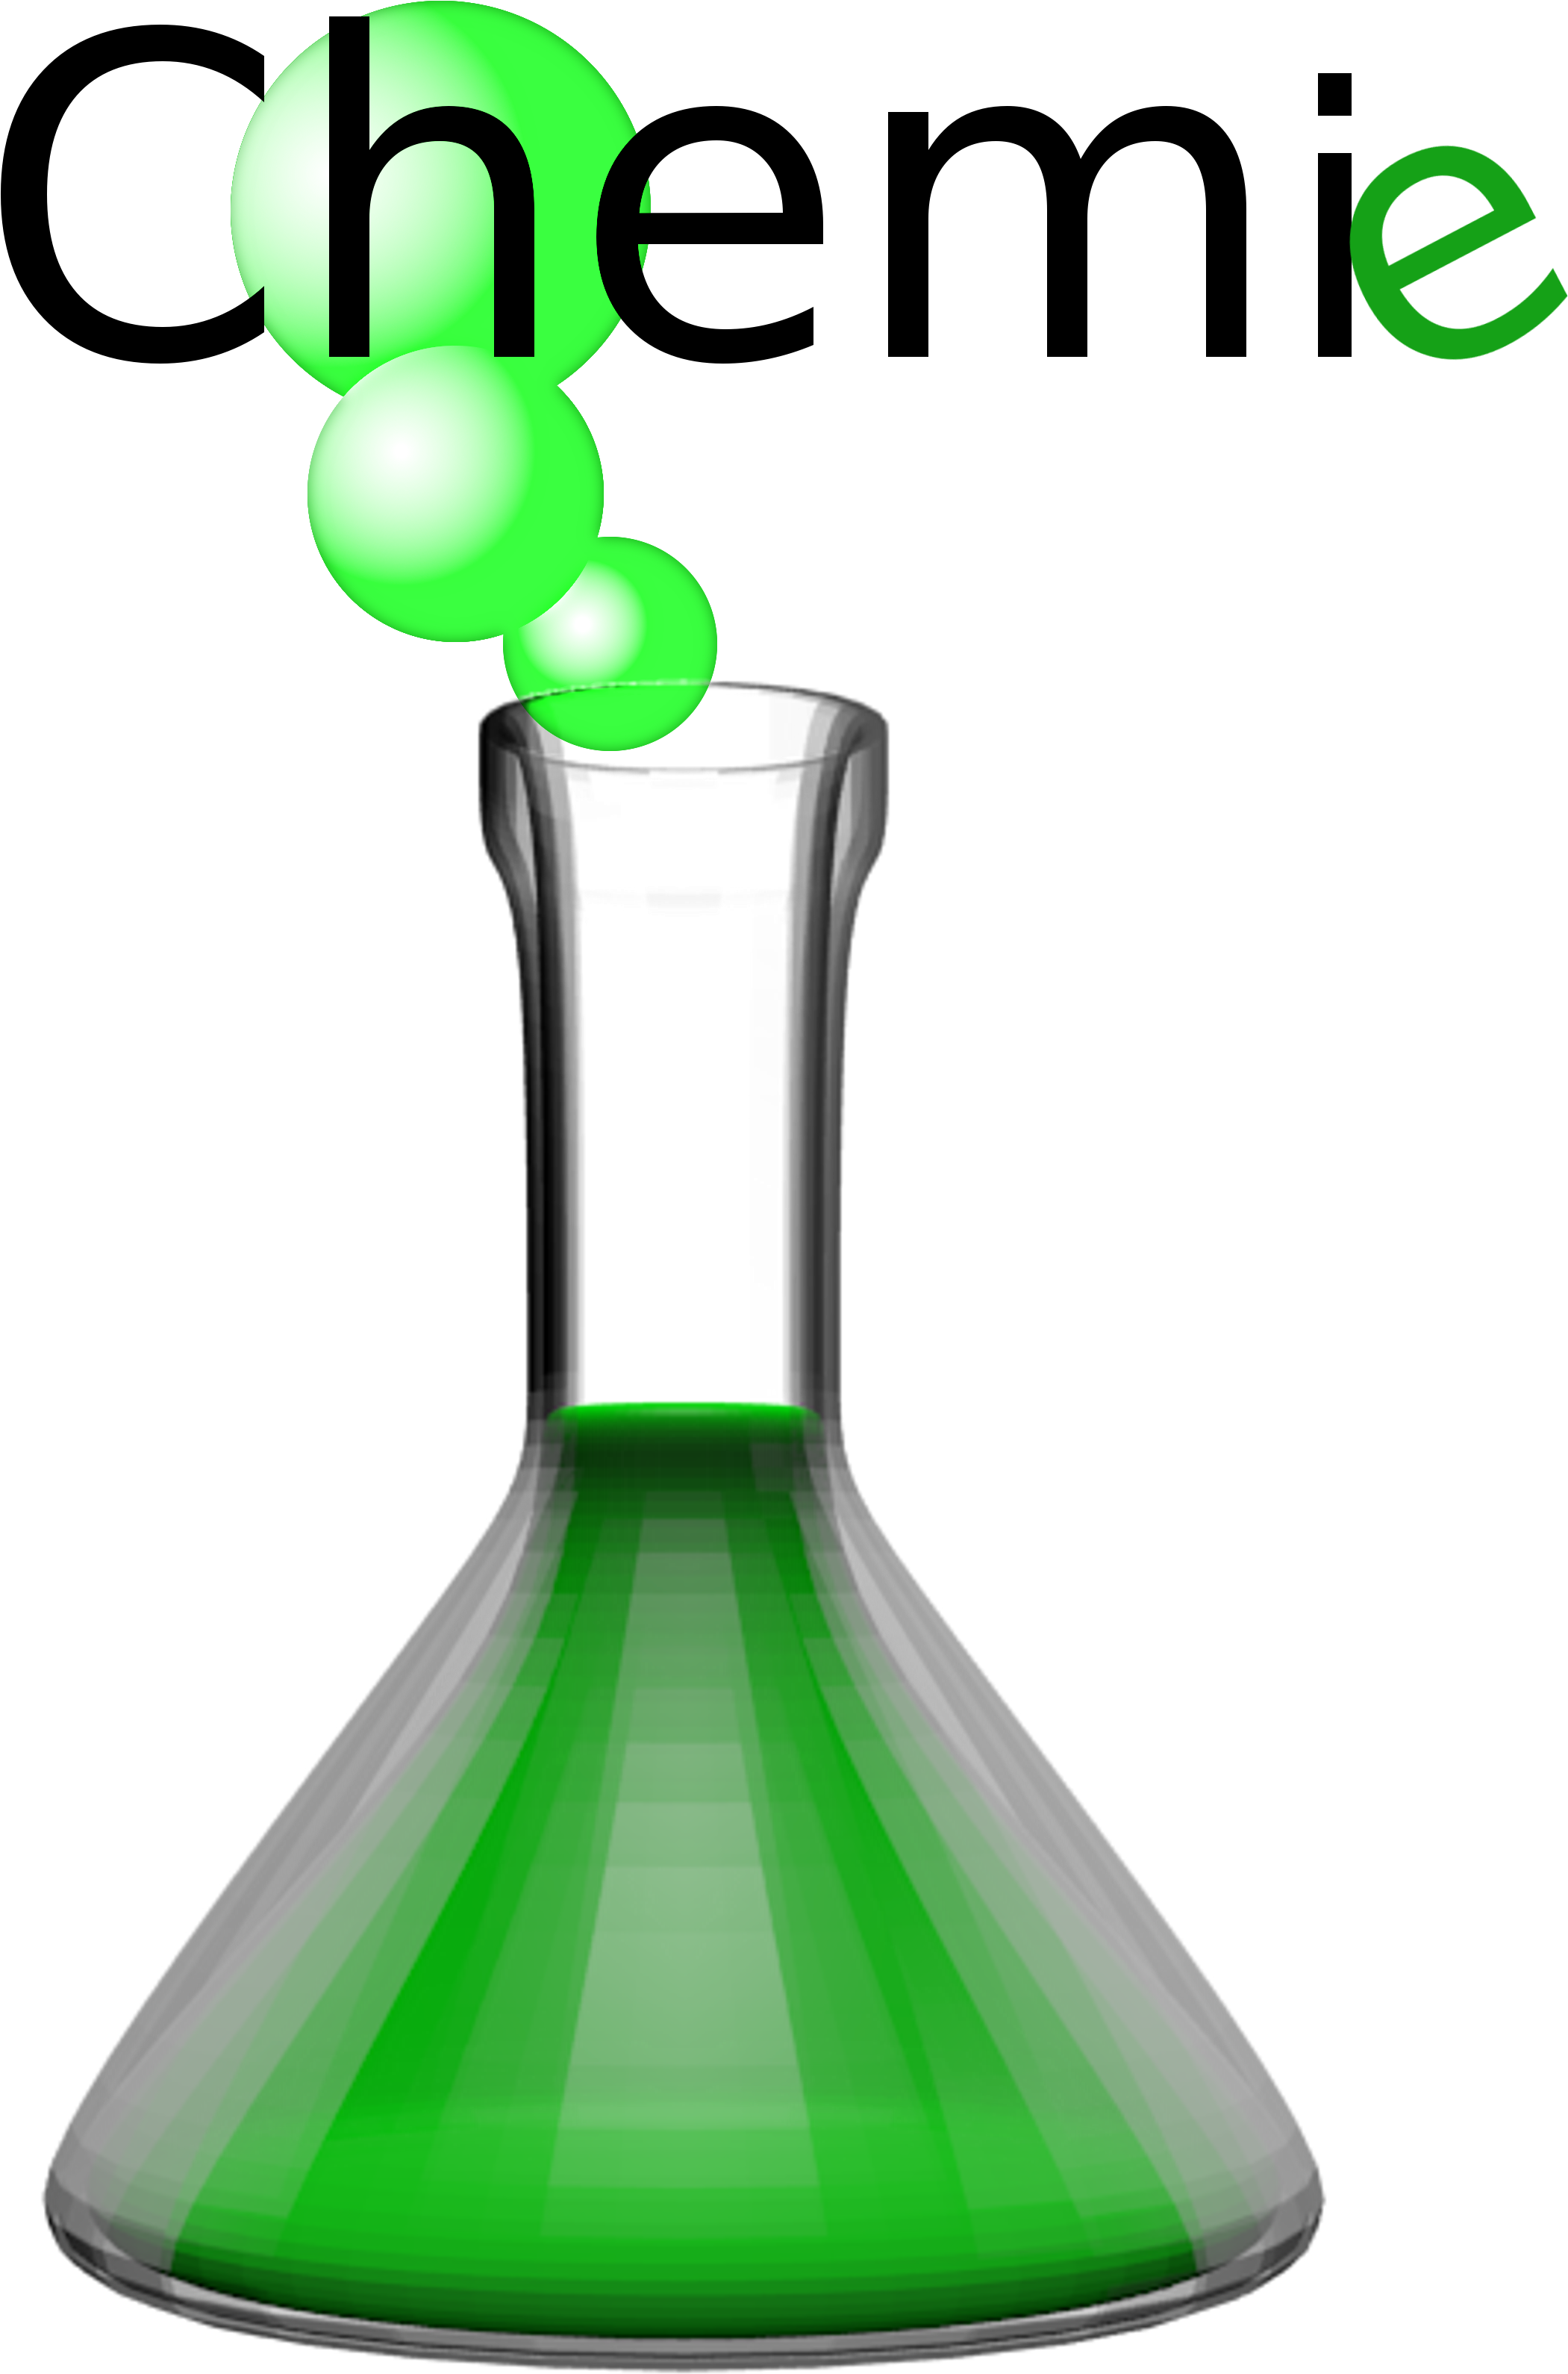 A Green Liquid In A Beaker